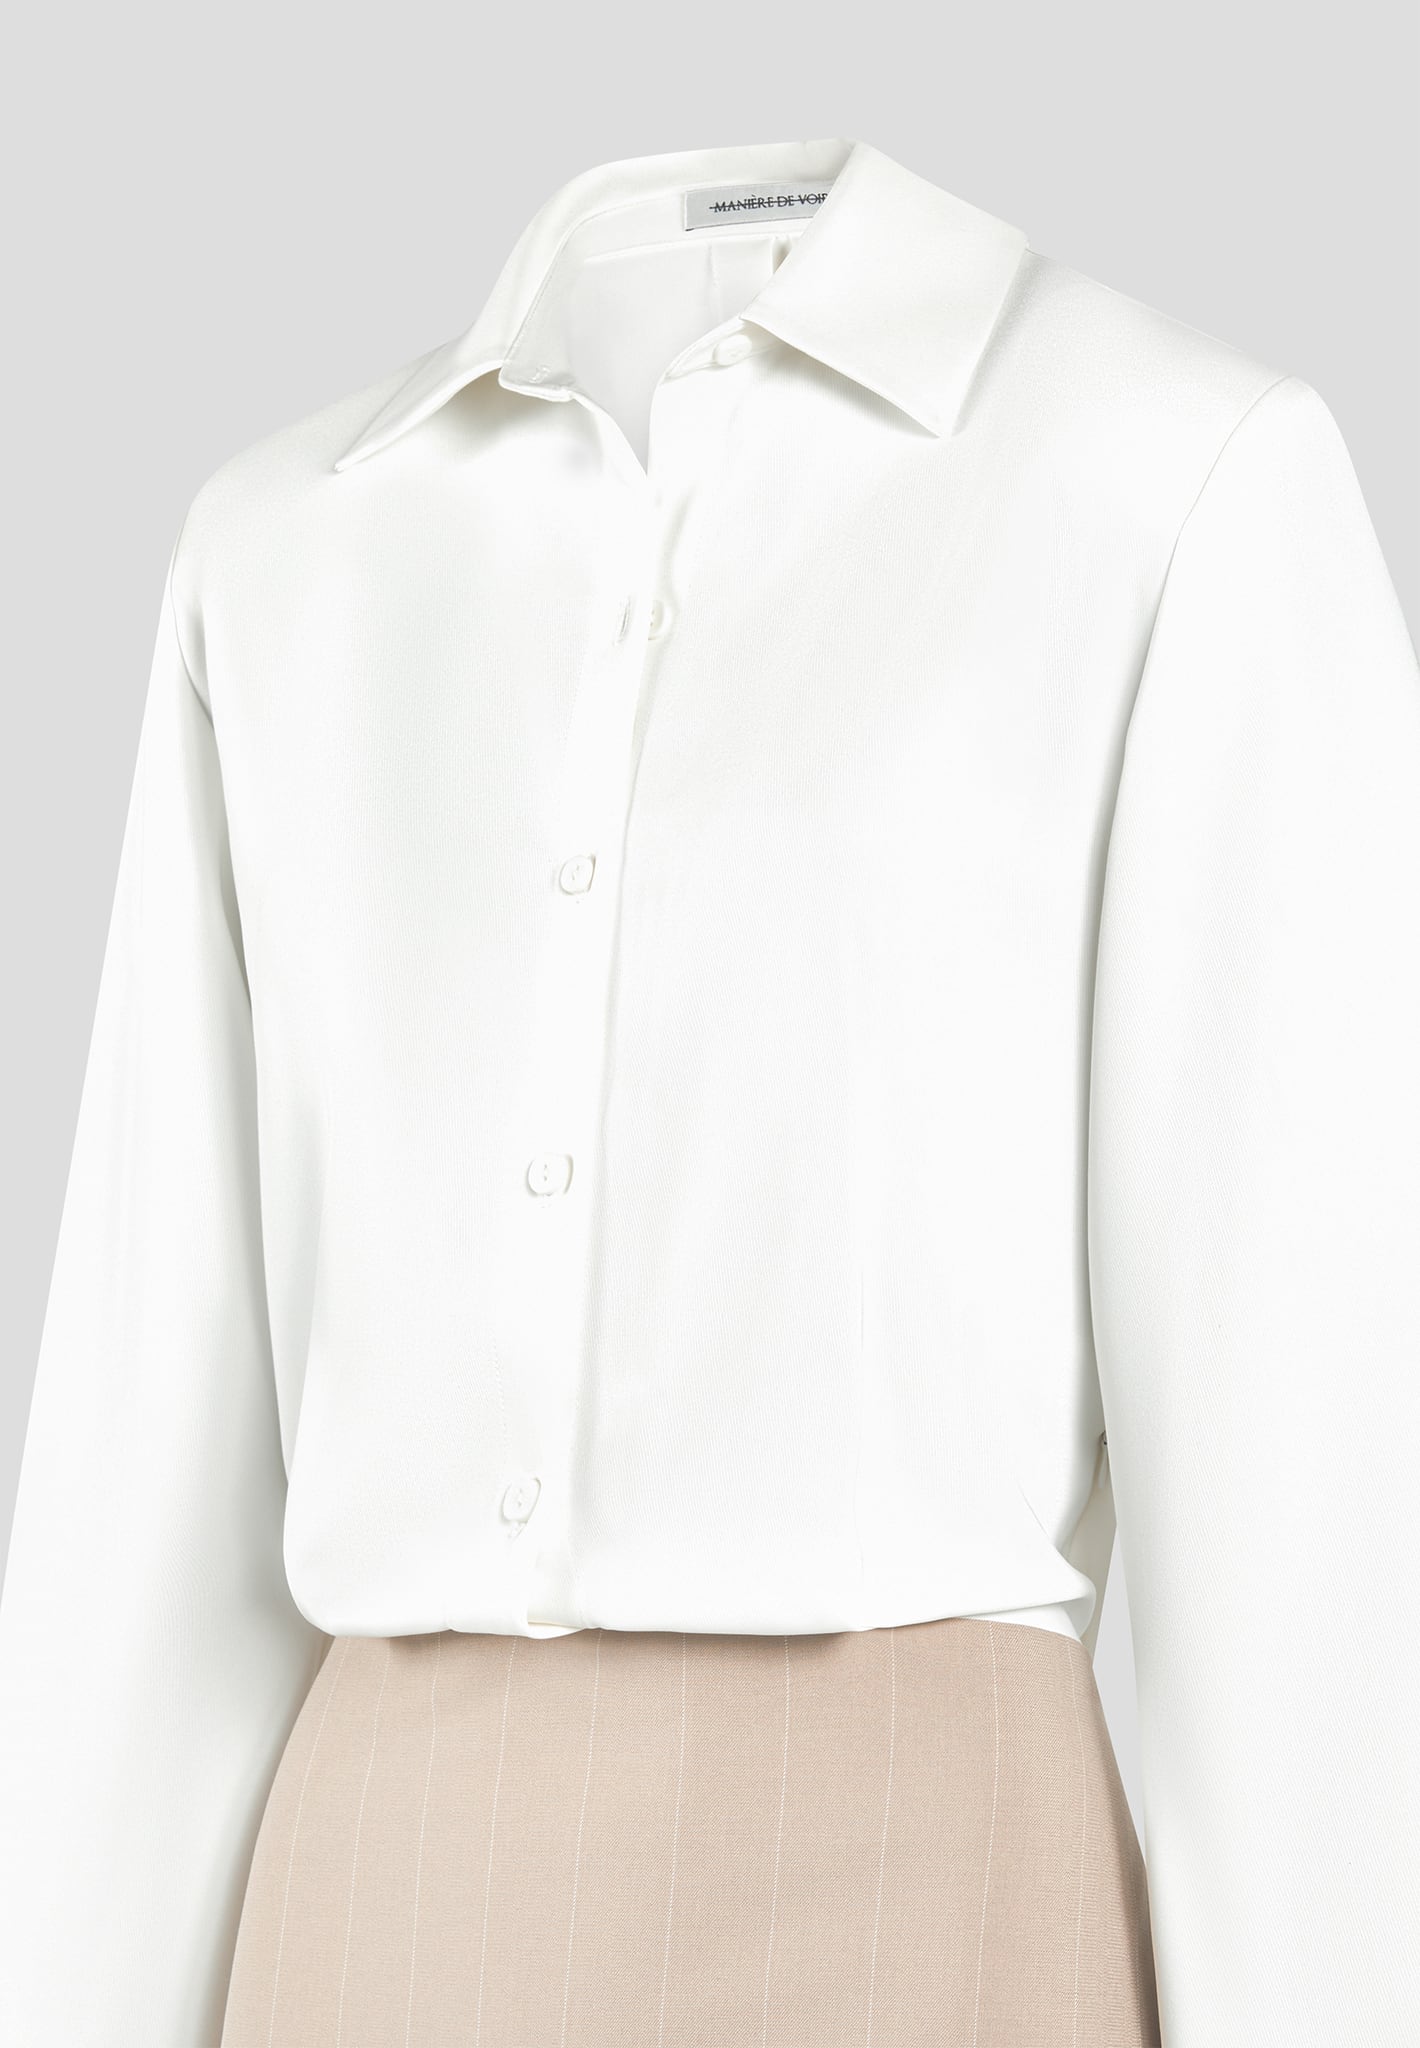 pinstripe-skirt-shirt-dress-white-beige